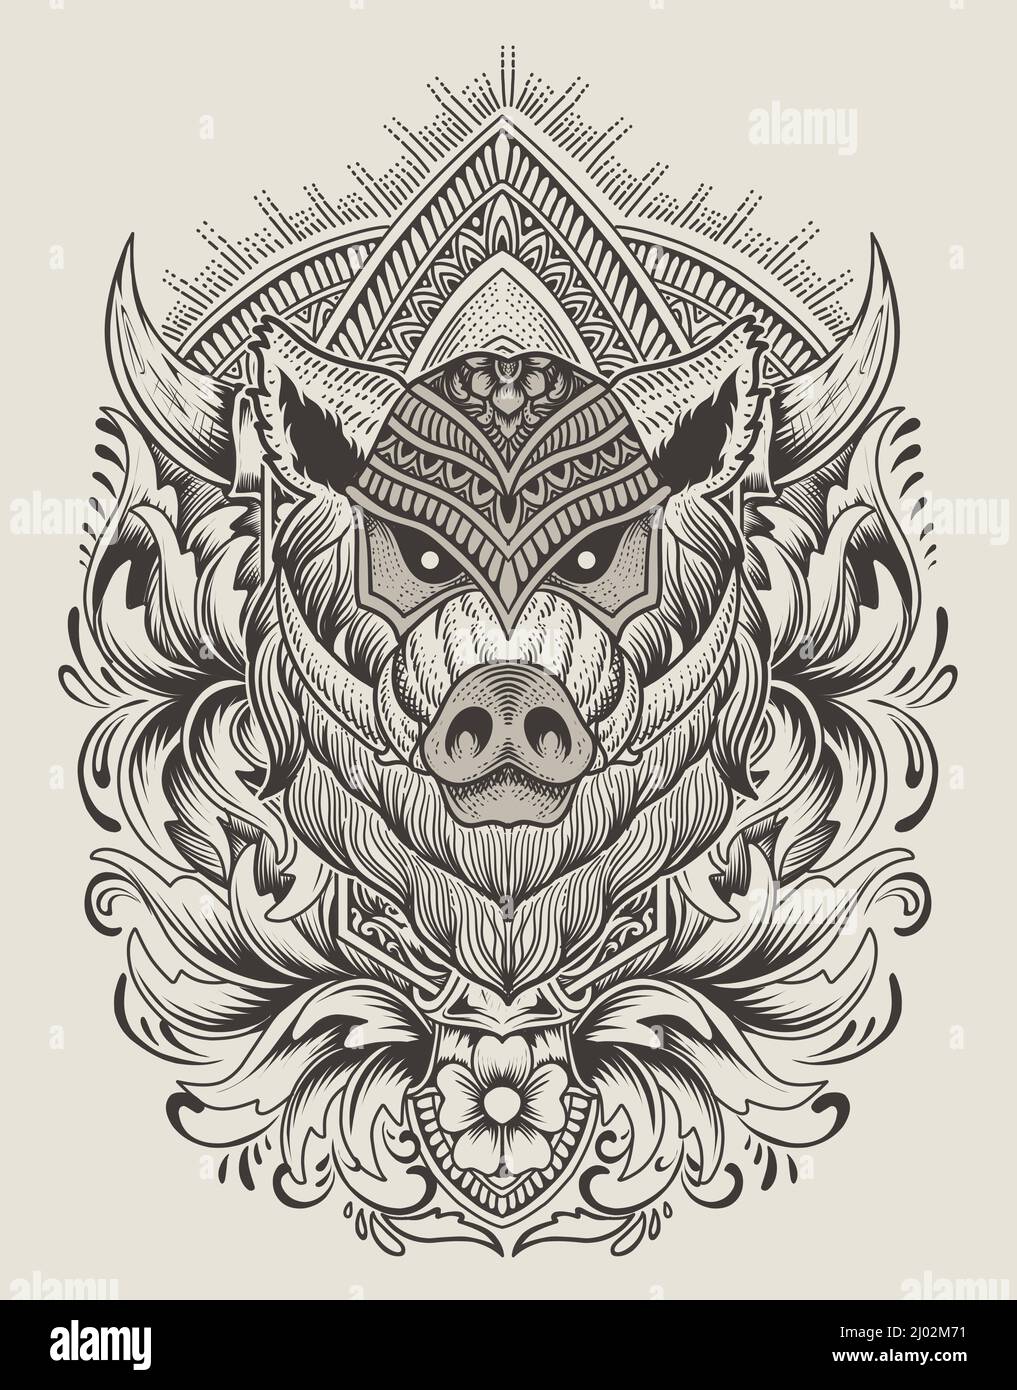 60 Boar Tattoo Designs For Men  Virulent Animal Ink Ideas